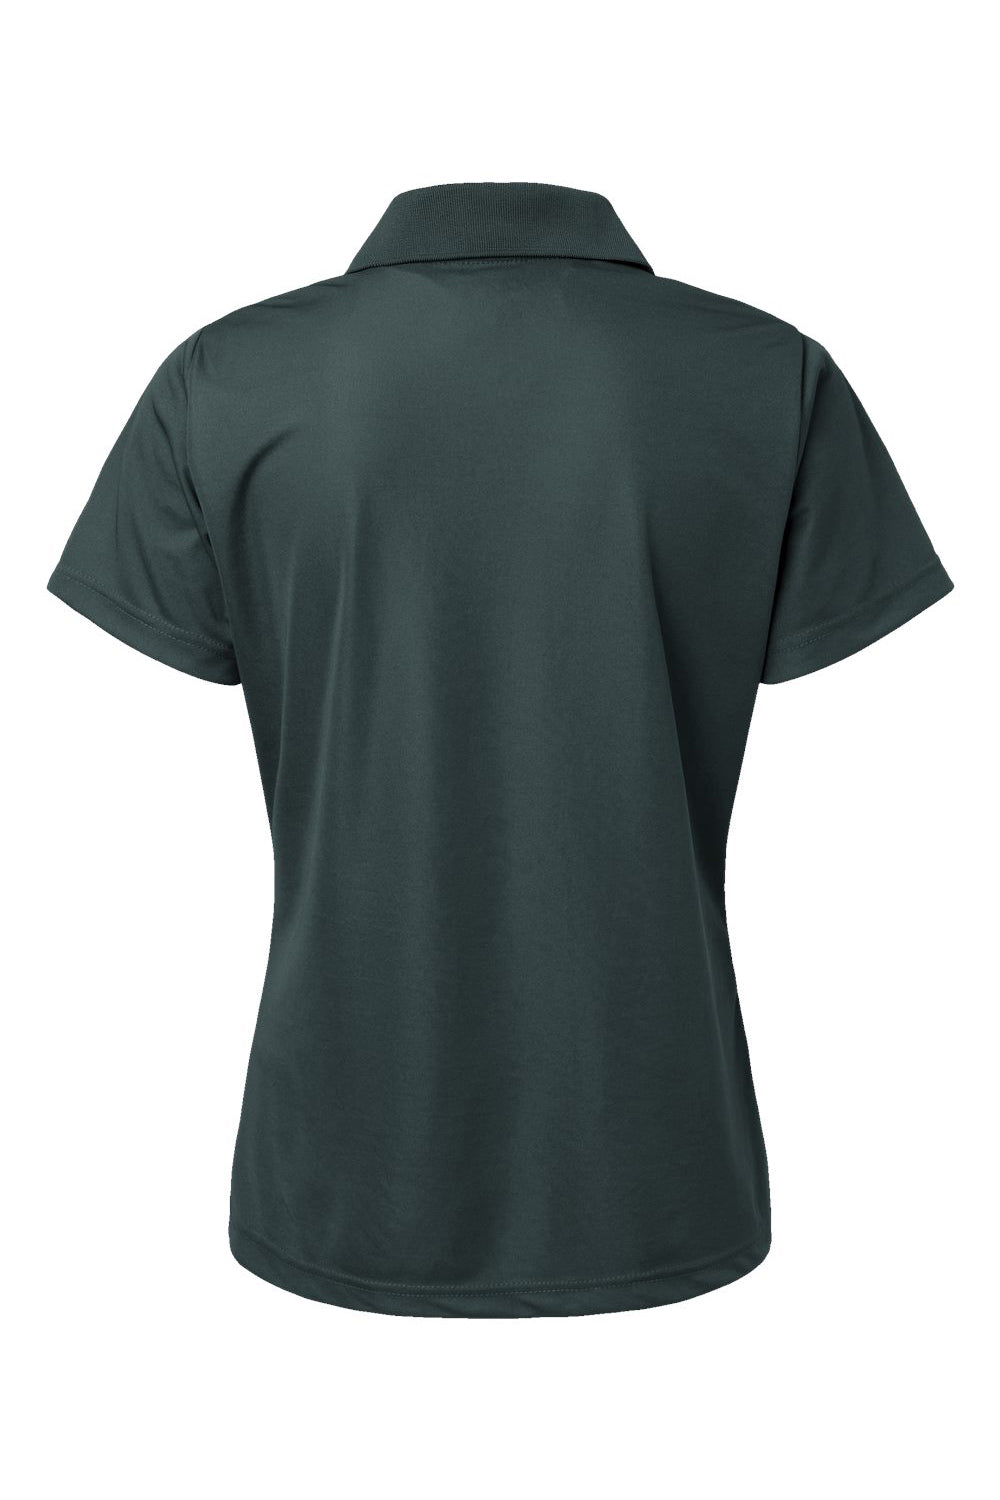 Paragon 504 Womens Sebring Performance Short Sleeve Polo Shirt Carbon Grey Flat Back